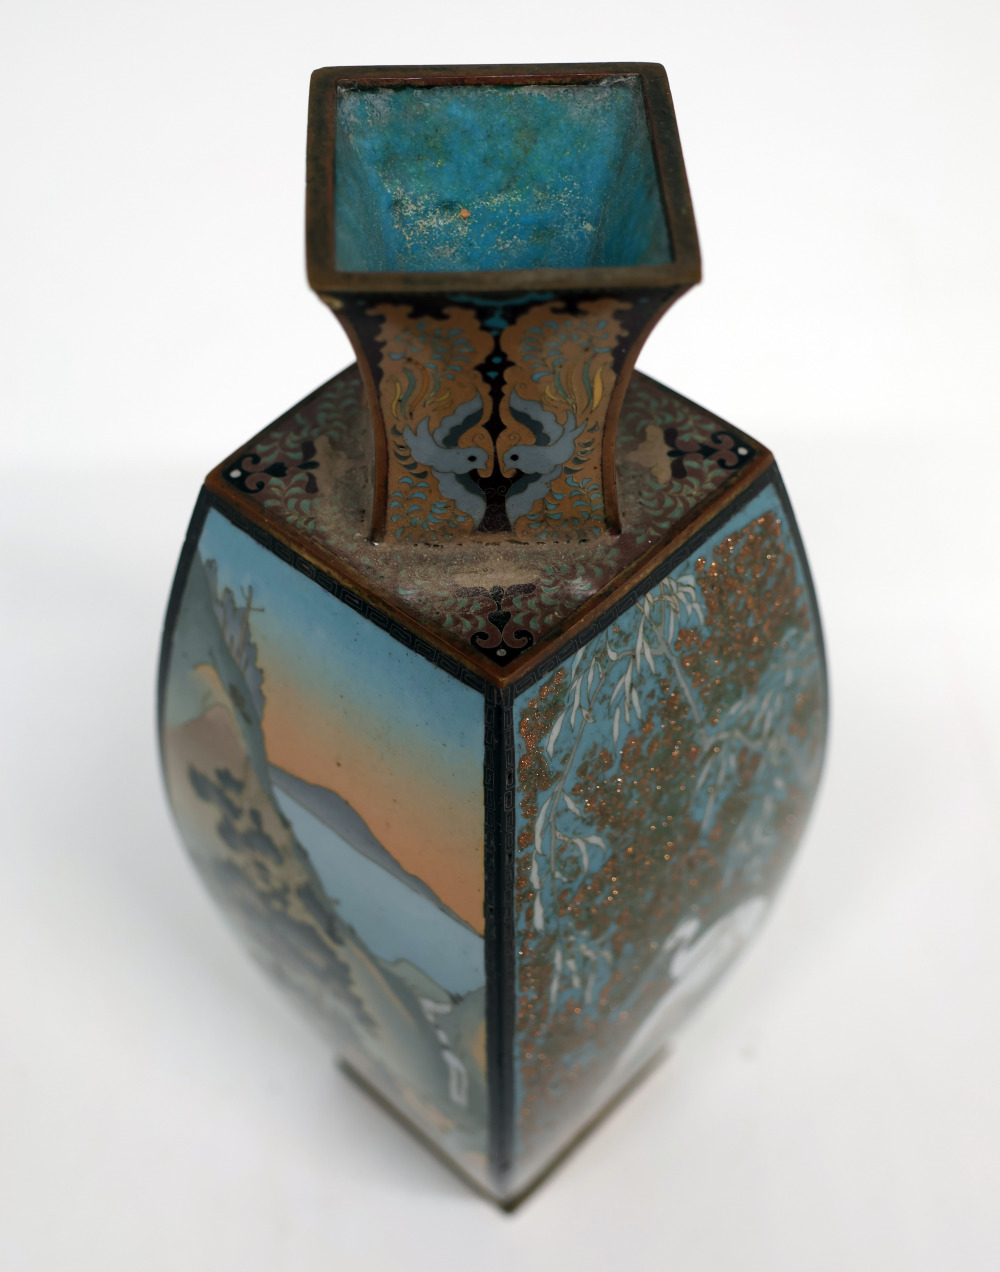 Asien, frühe Cloisonné Vase mit feinen Landschafts- und Vogelmotiven, interessante, kantige Form, - Image 3 of 11